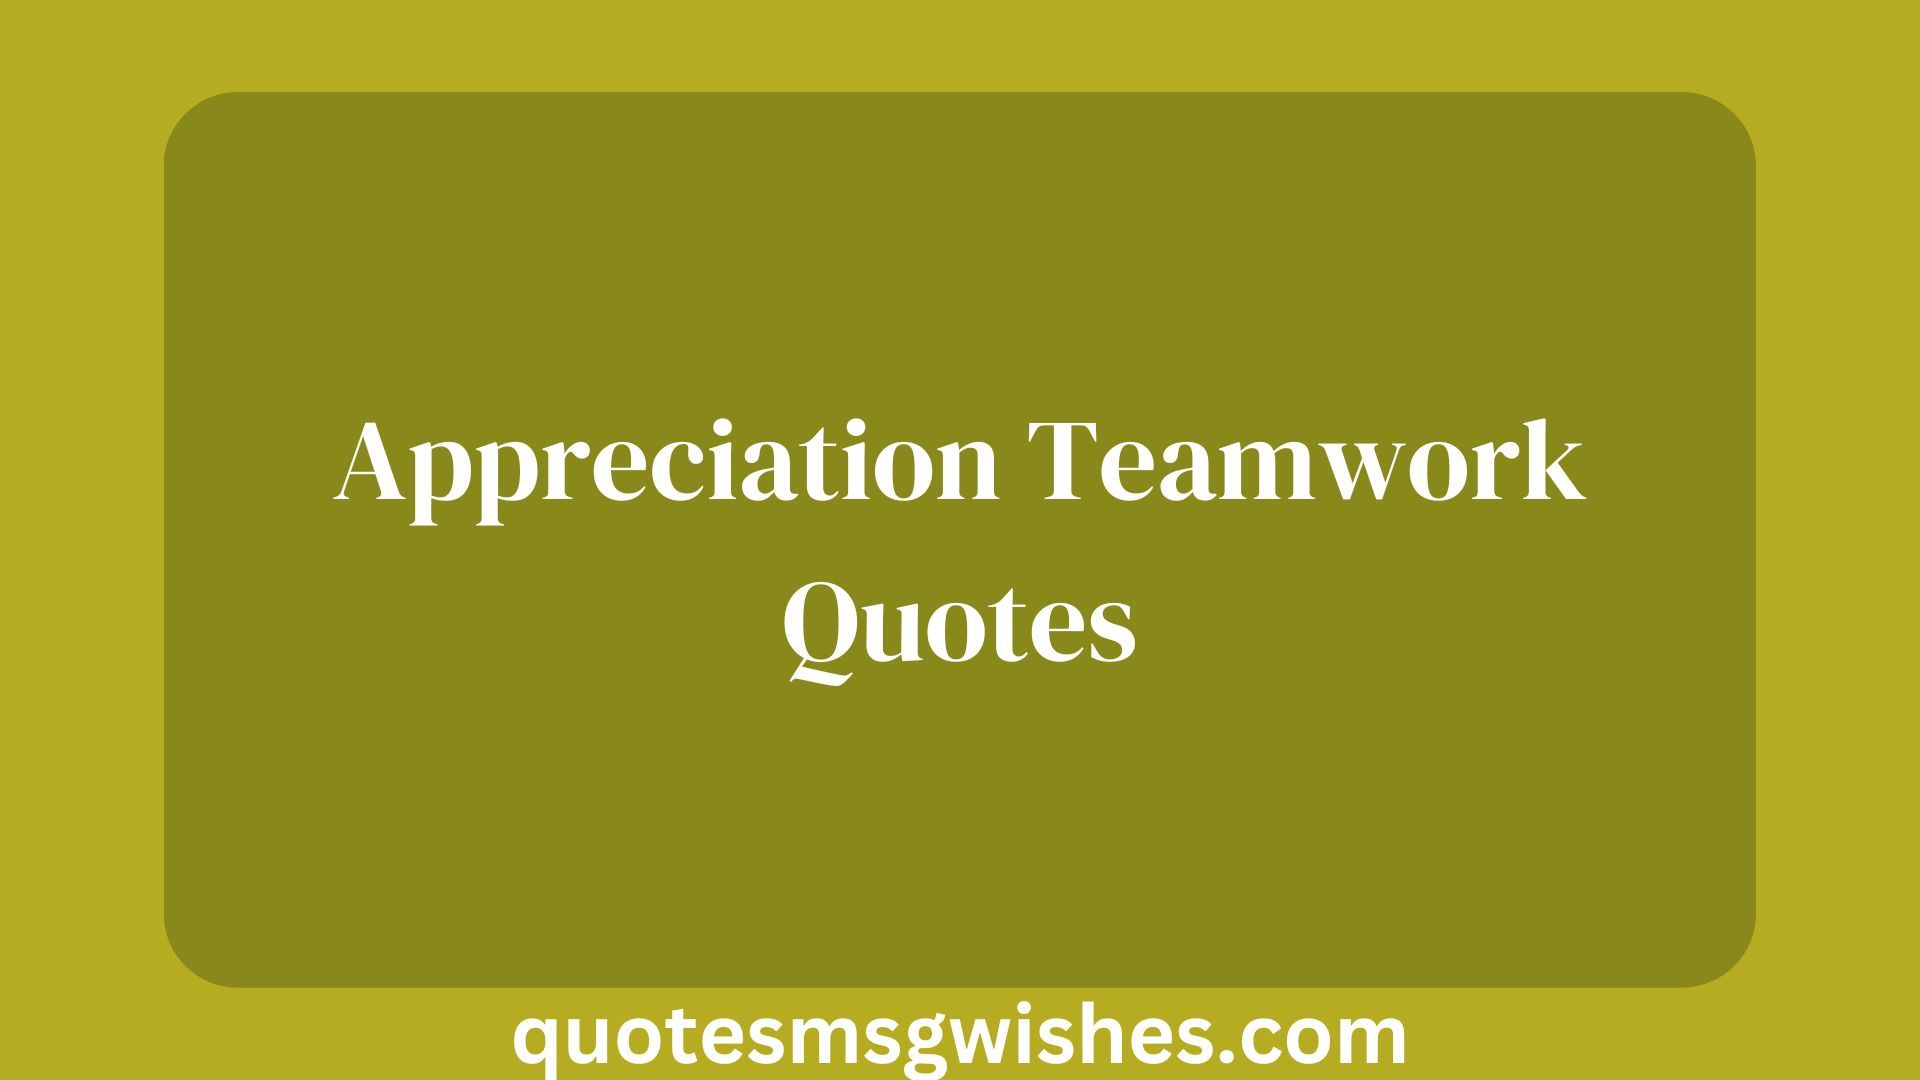 Appreciation Teamwork Quotes